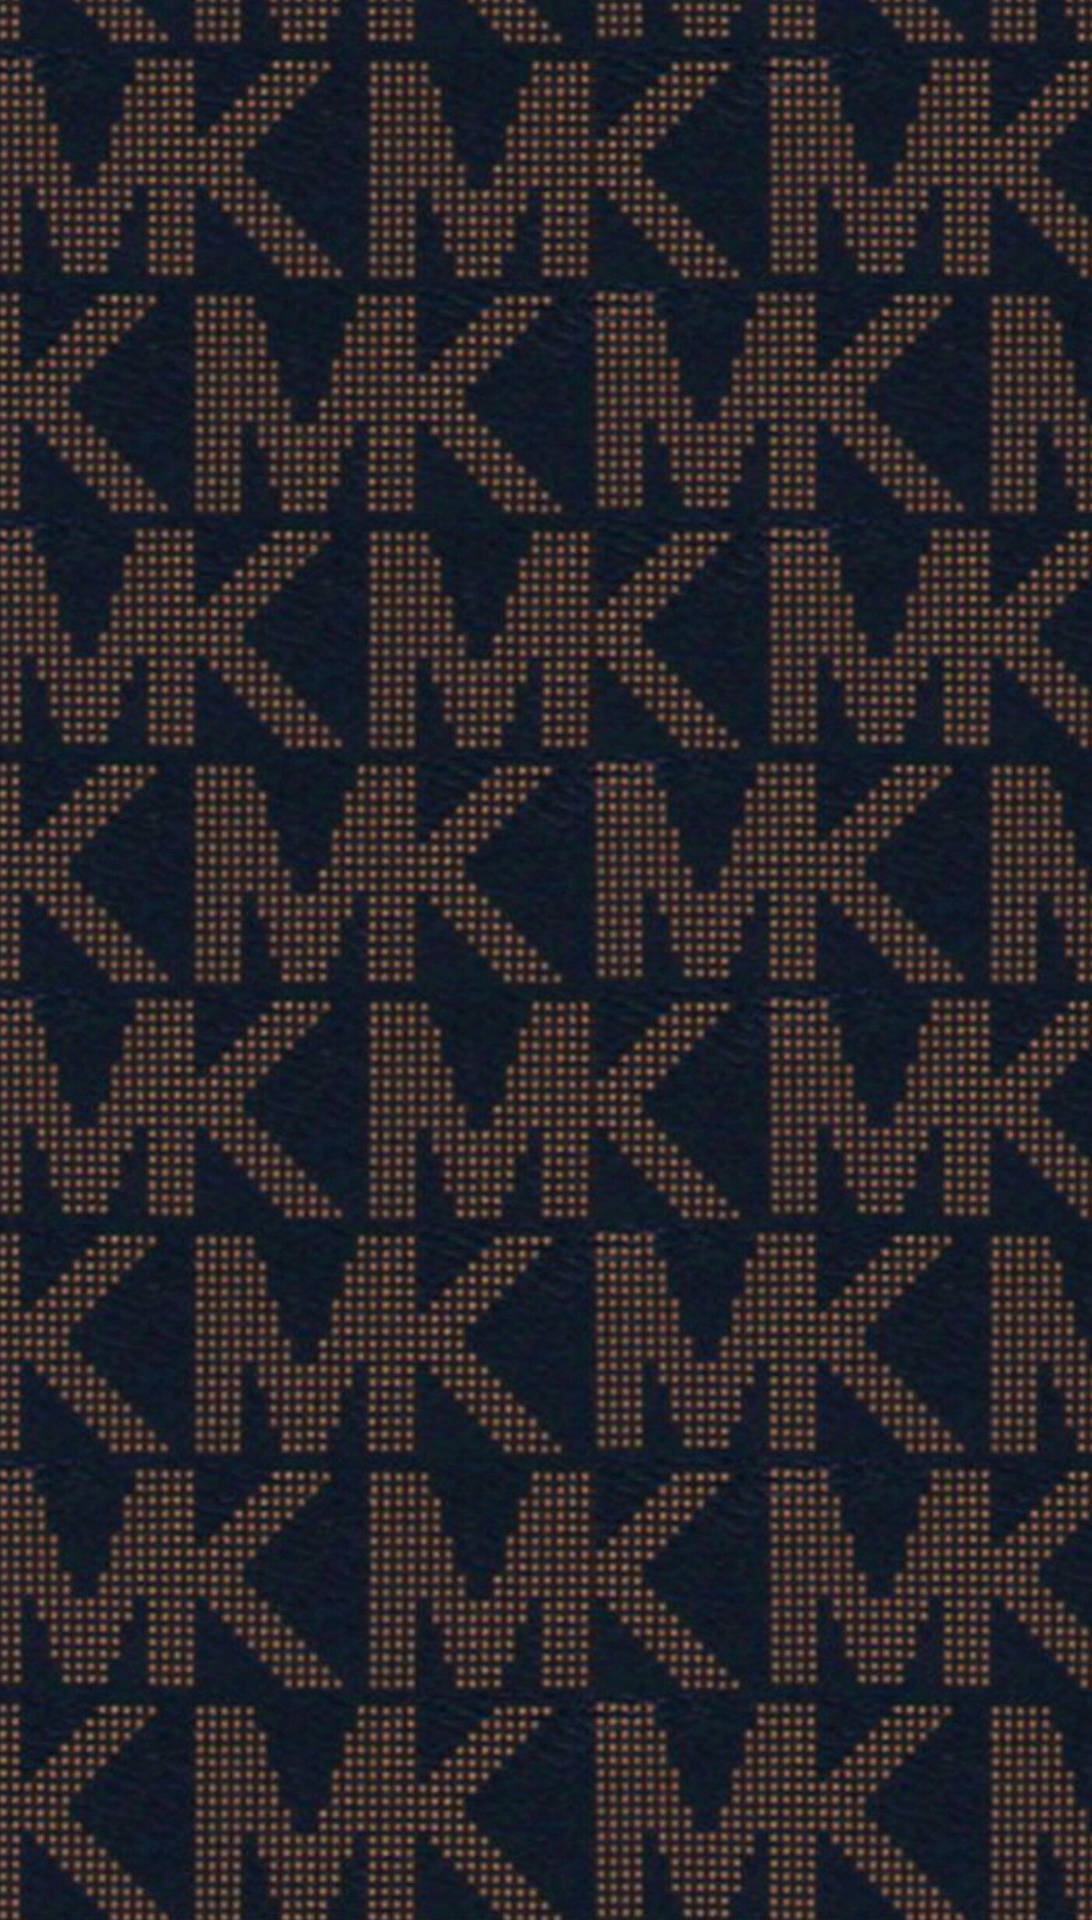 Michael Kors Classic Mk Initials Background